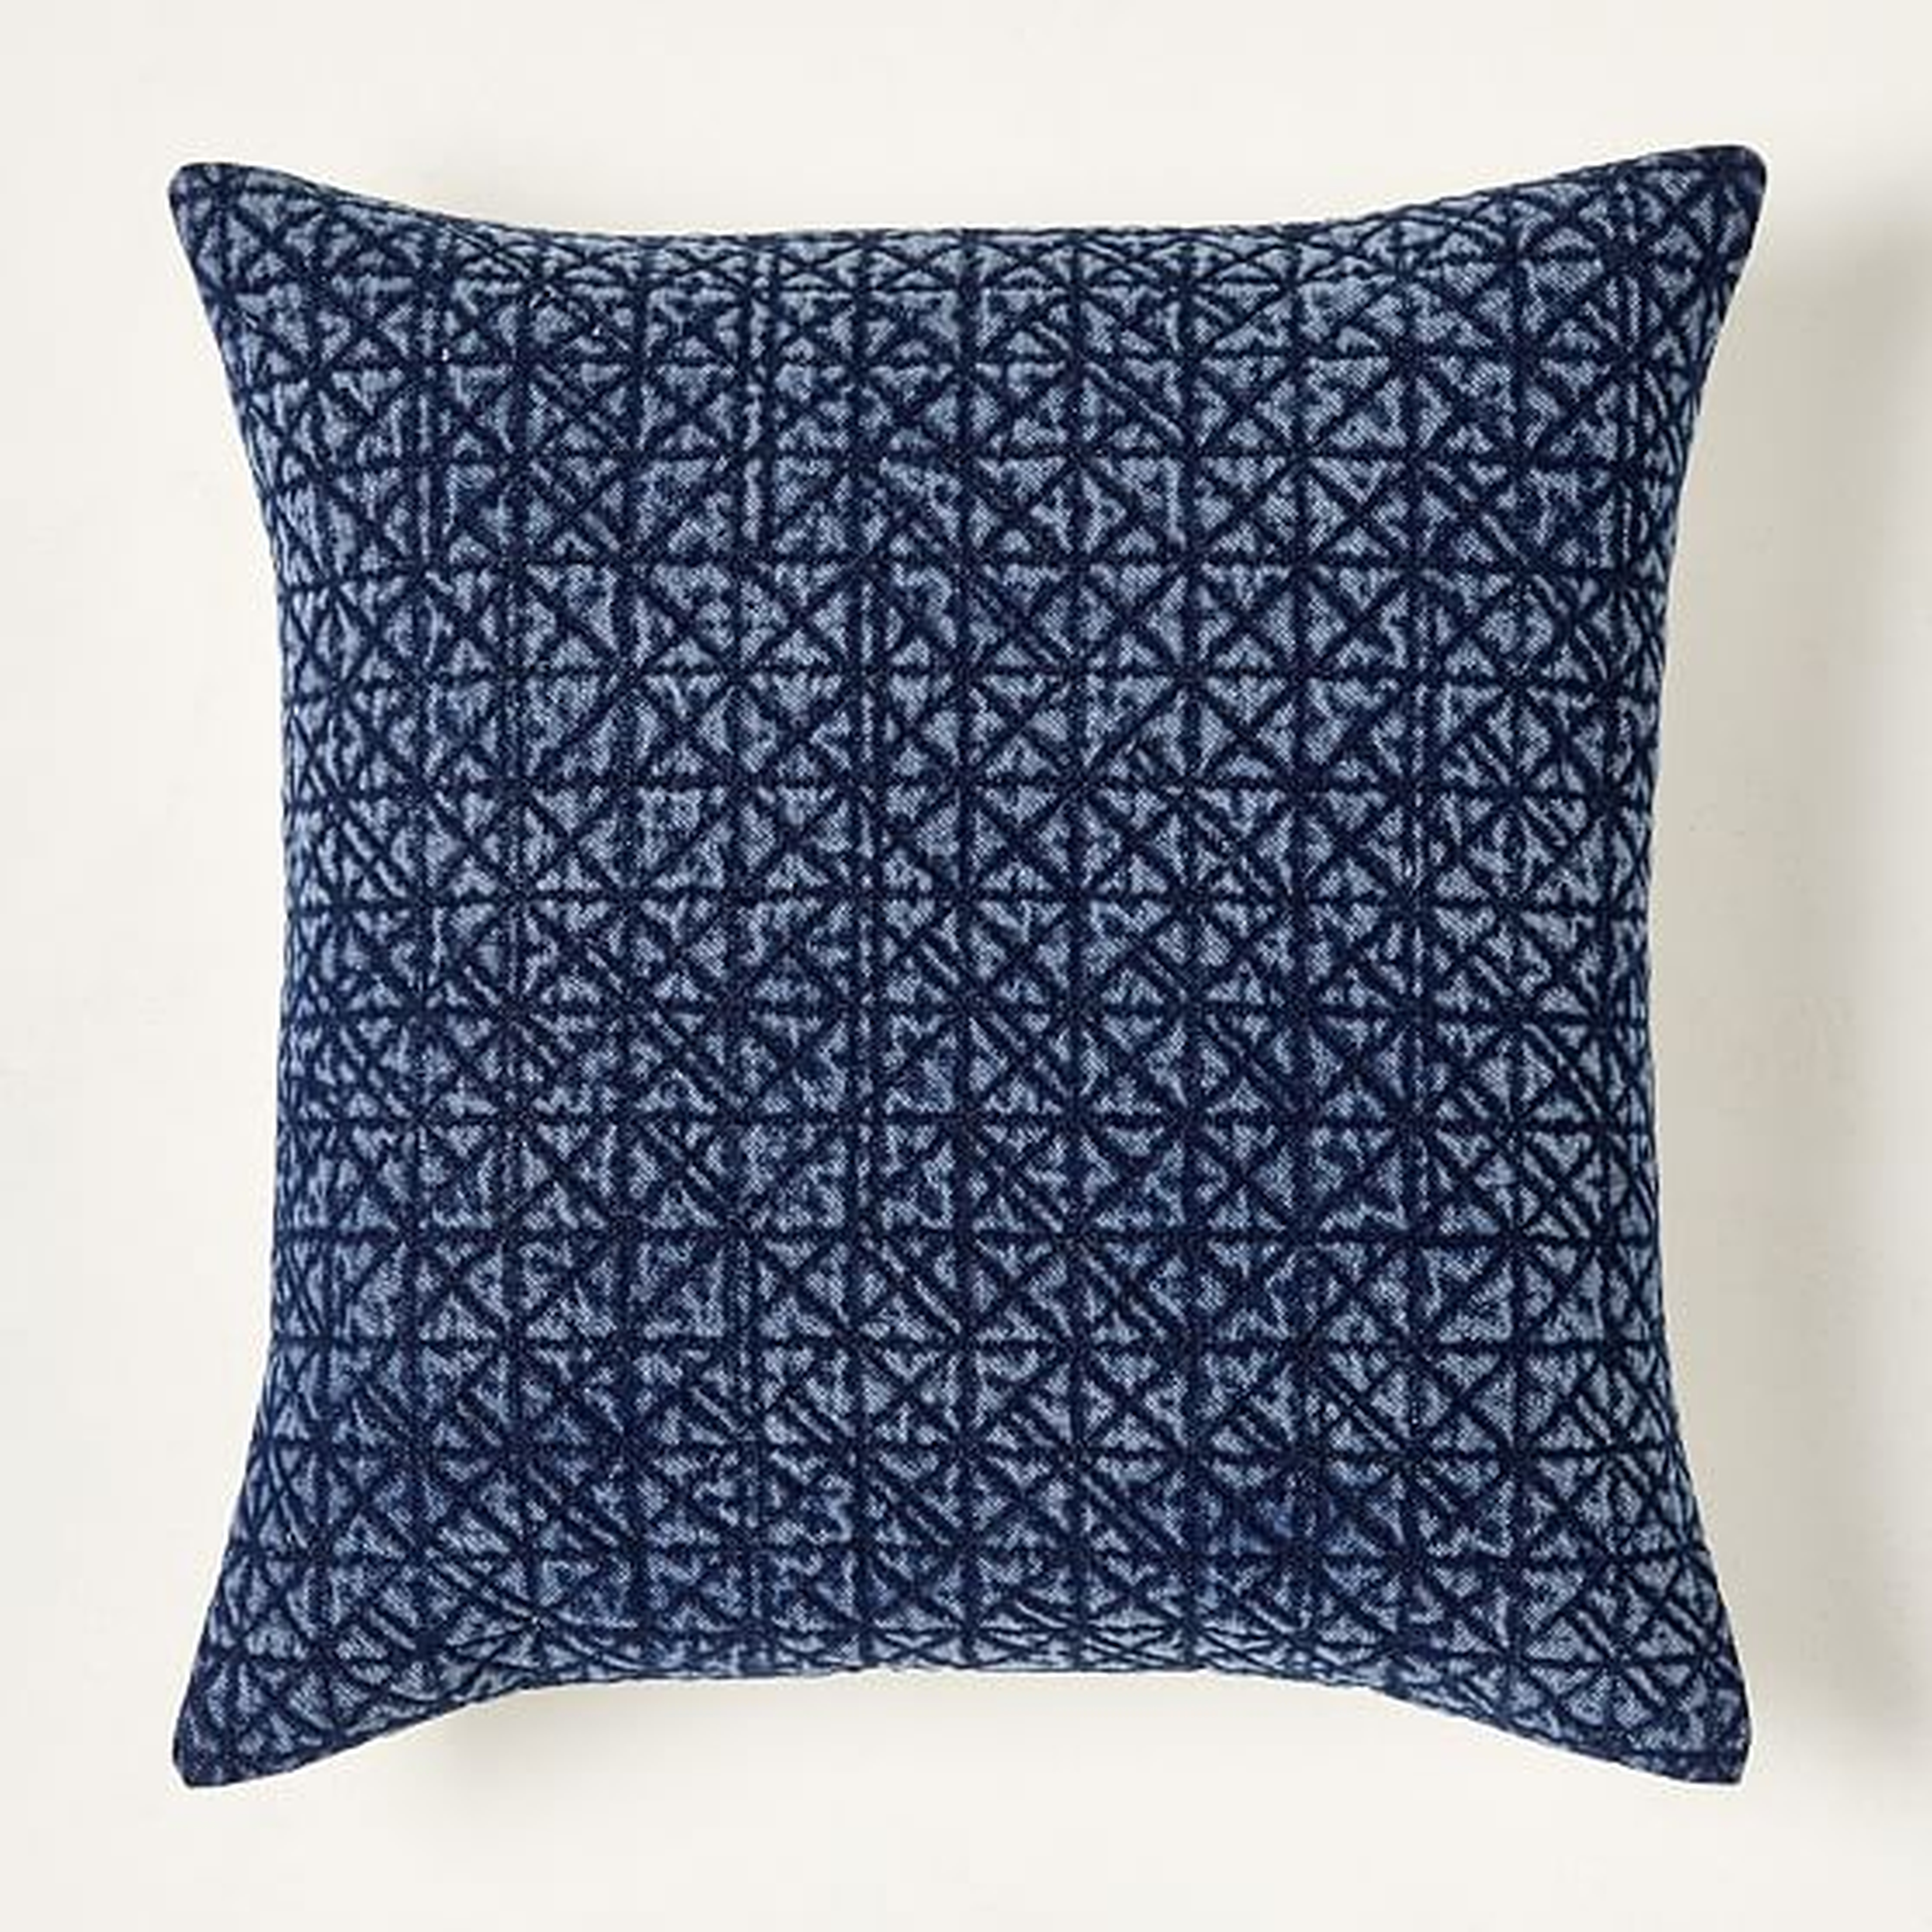 Lattice Tie Dye Pillow Cover, Indigo, 20"x20" - West Elm